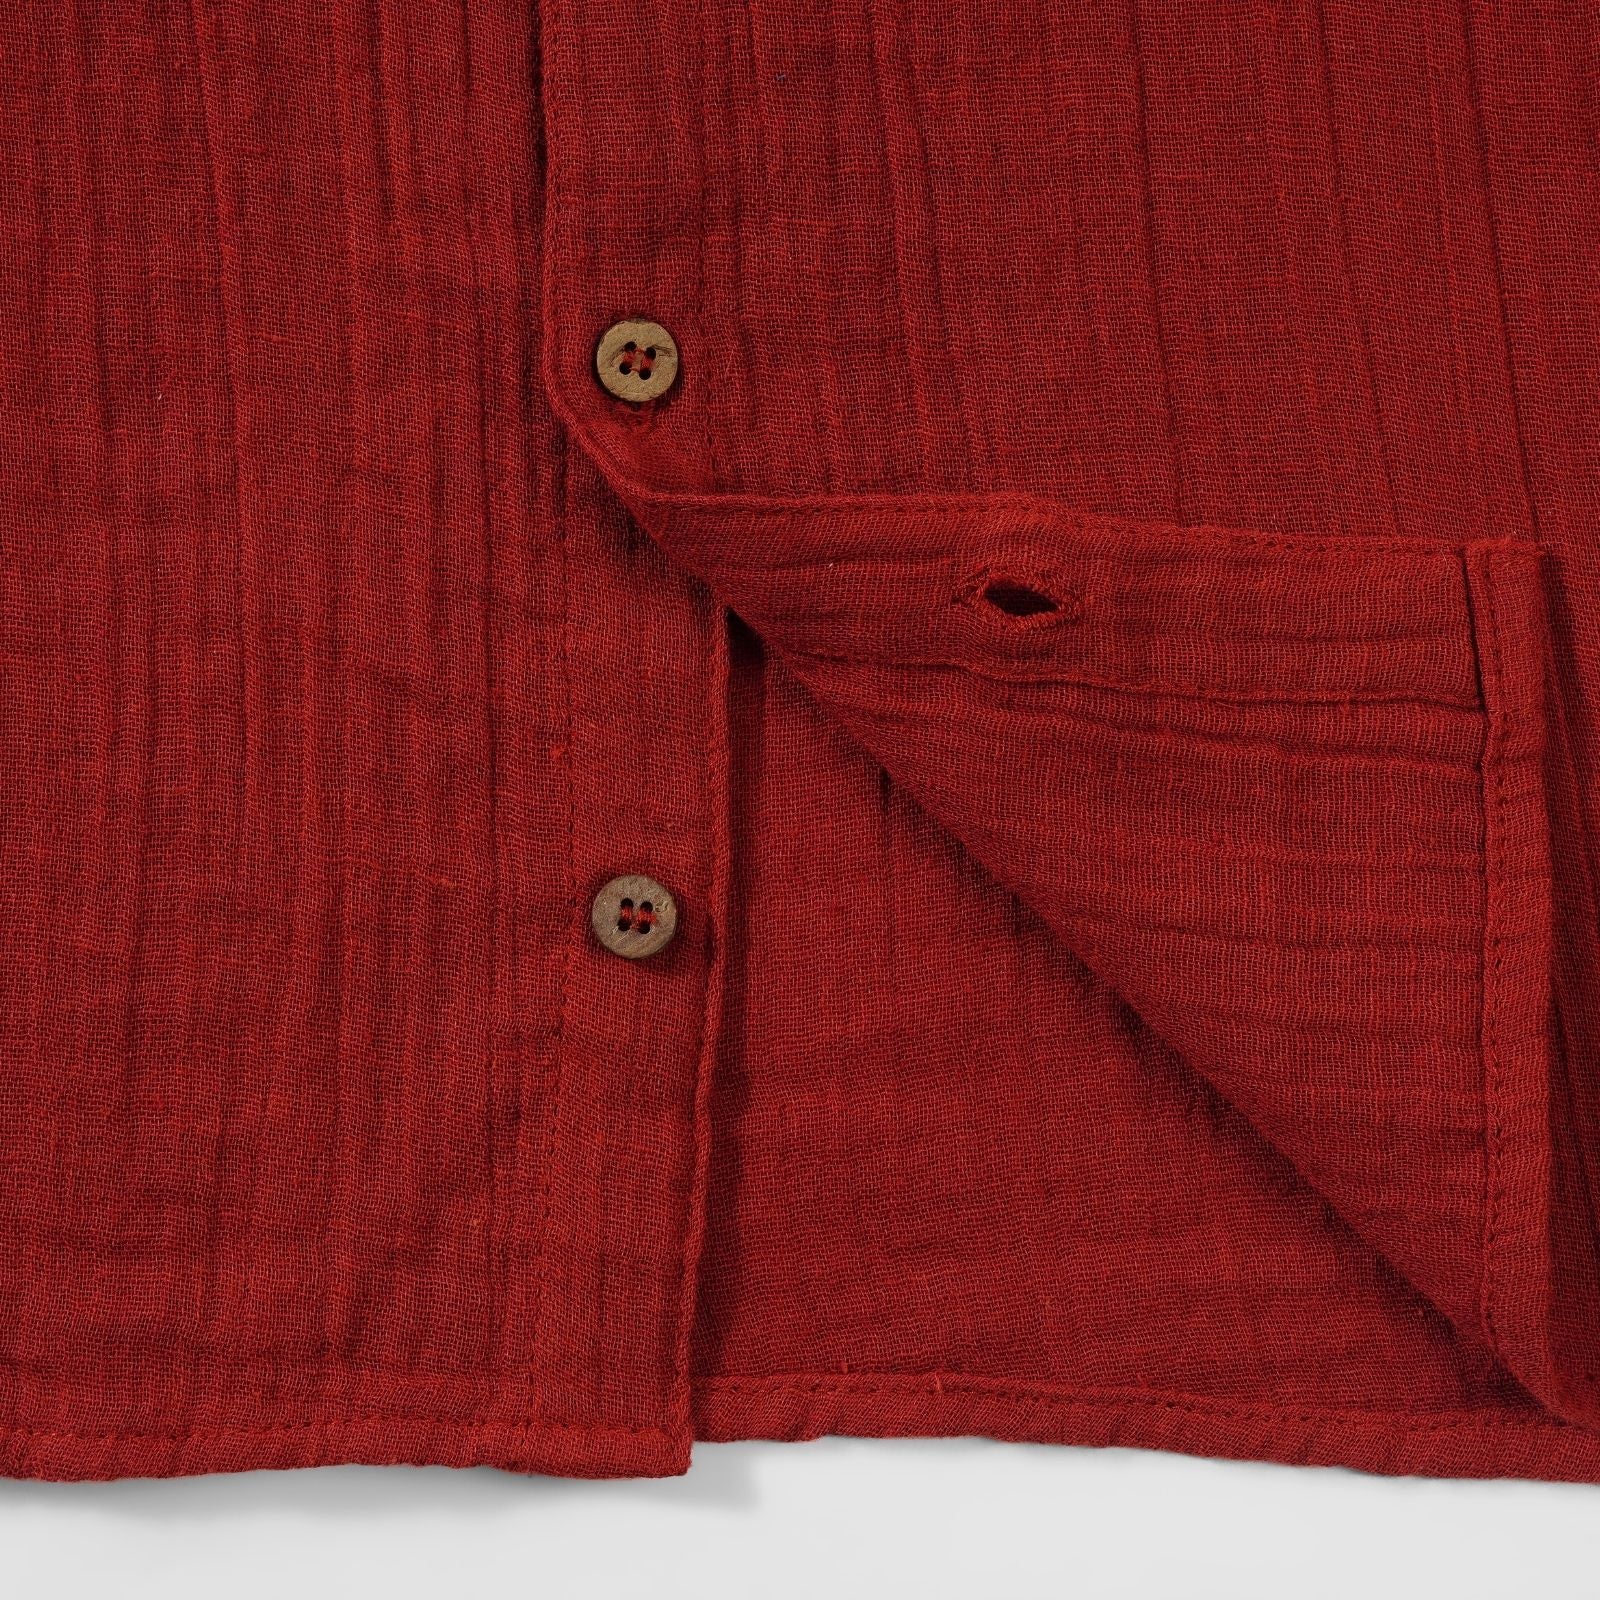 Greendeer Acko Half Sleeve Shirt - Cherry Red